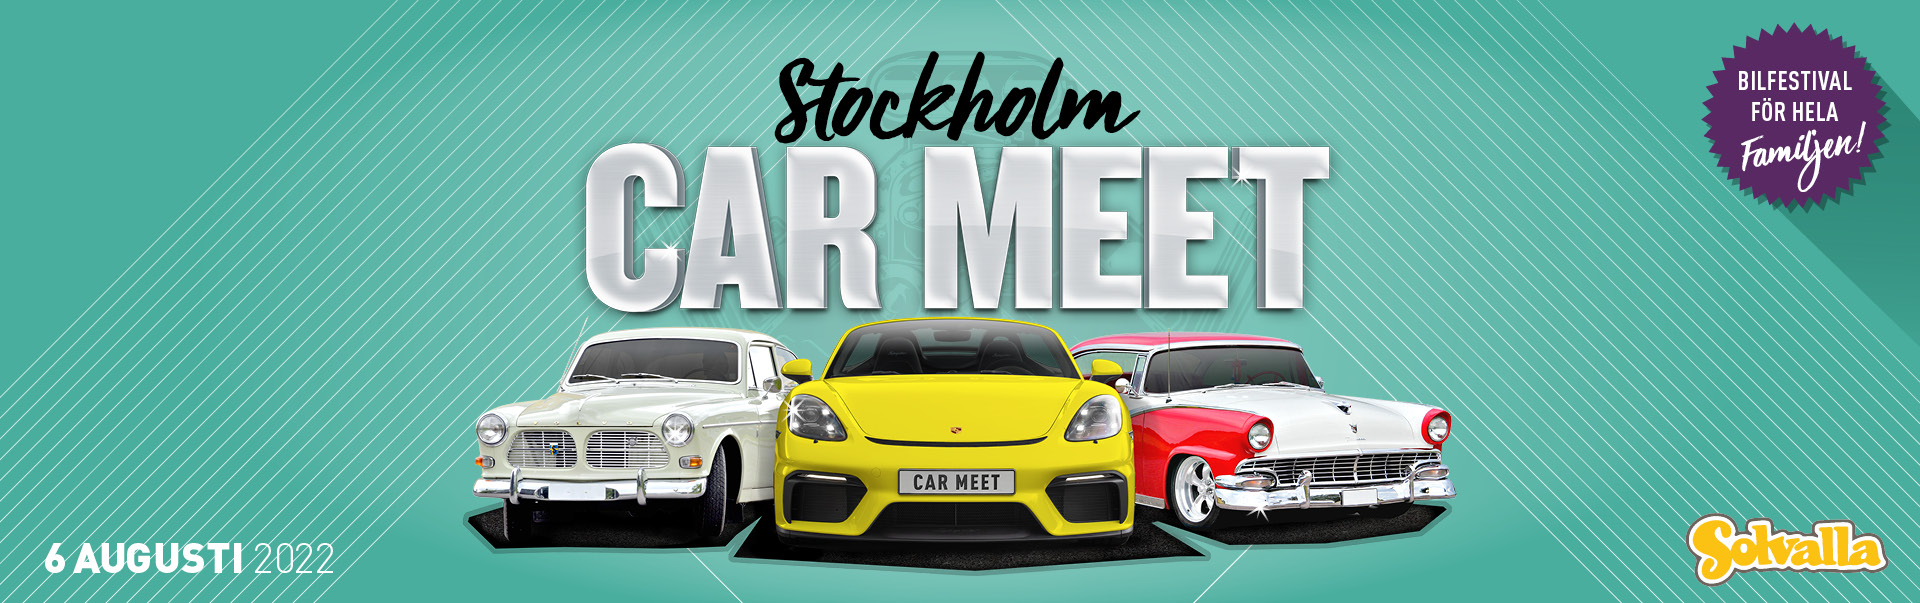 Stockholm Car Meet